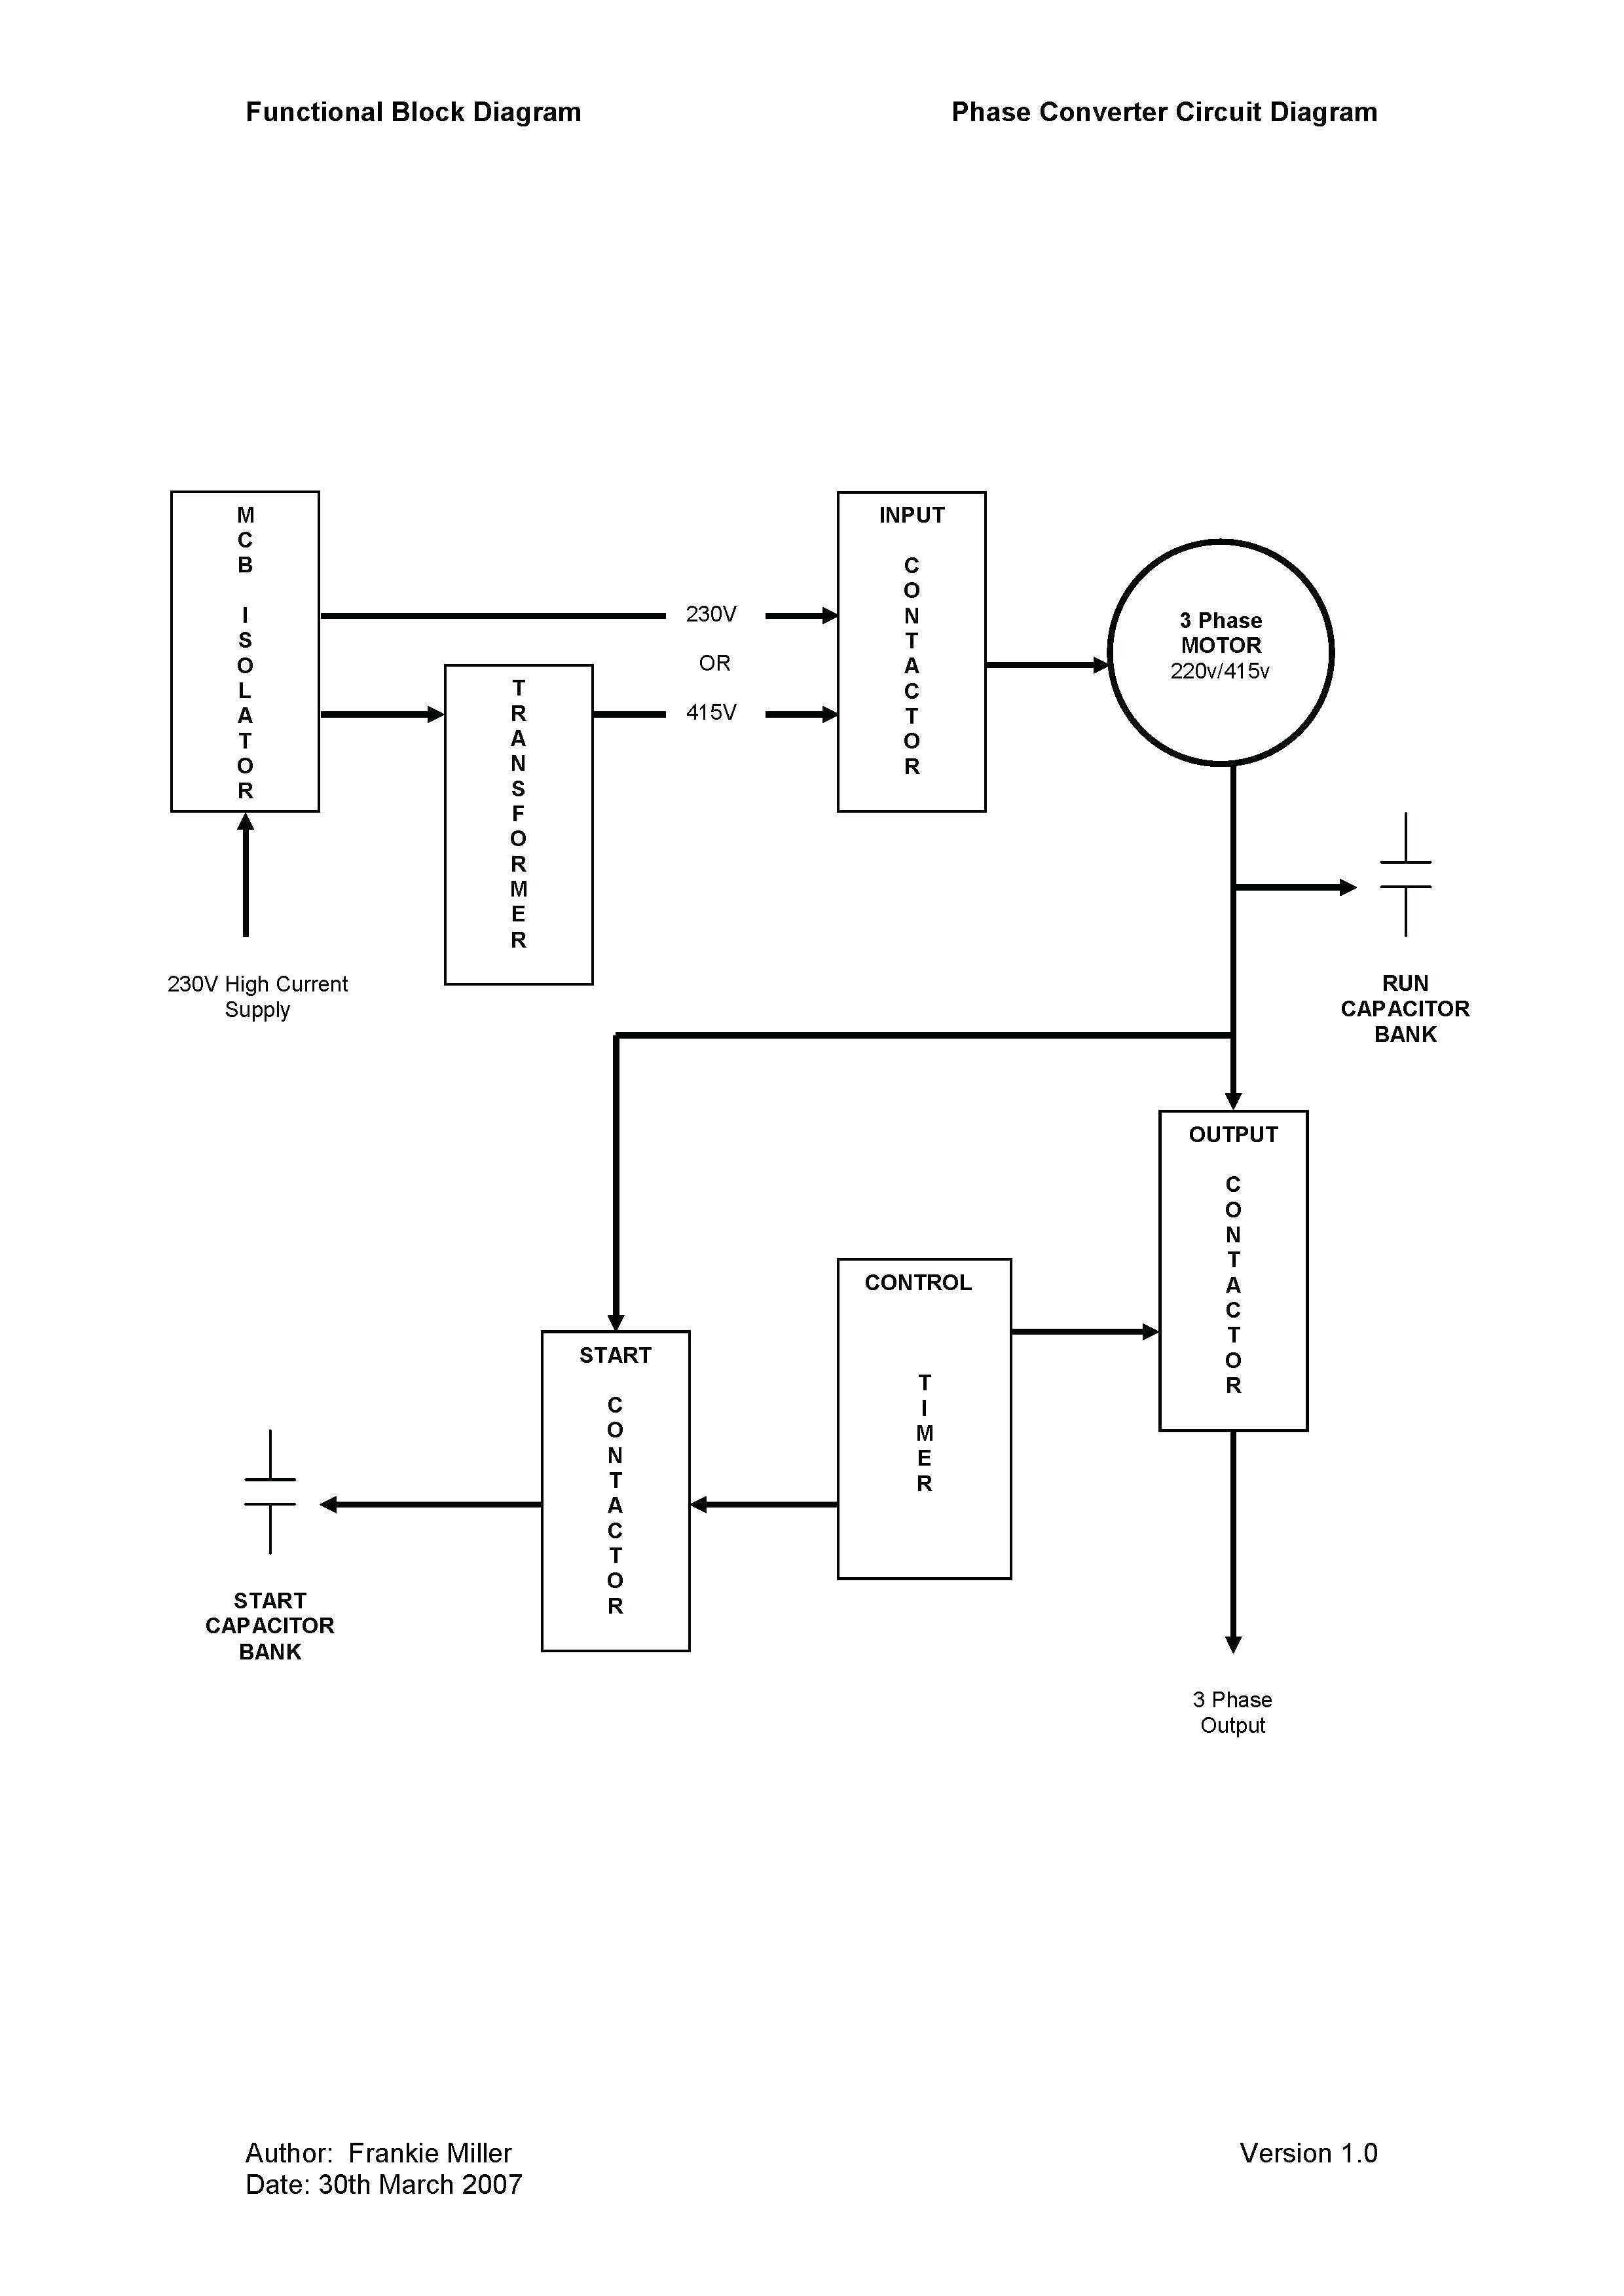 Three Phase Converter Wiring Diagram Ronk Phase Converter Wiring Diagram 3 Lenito Of Three Phase Converter Wiring Diagram